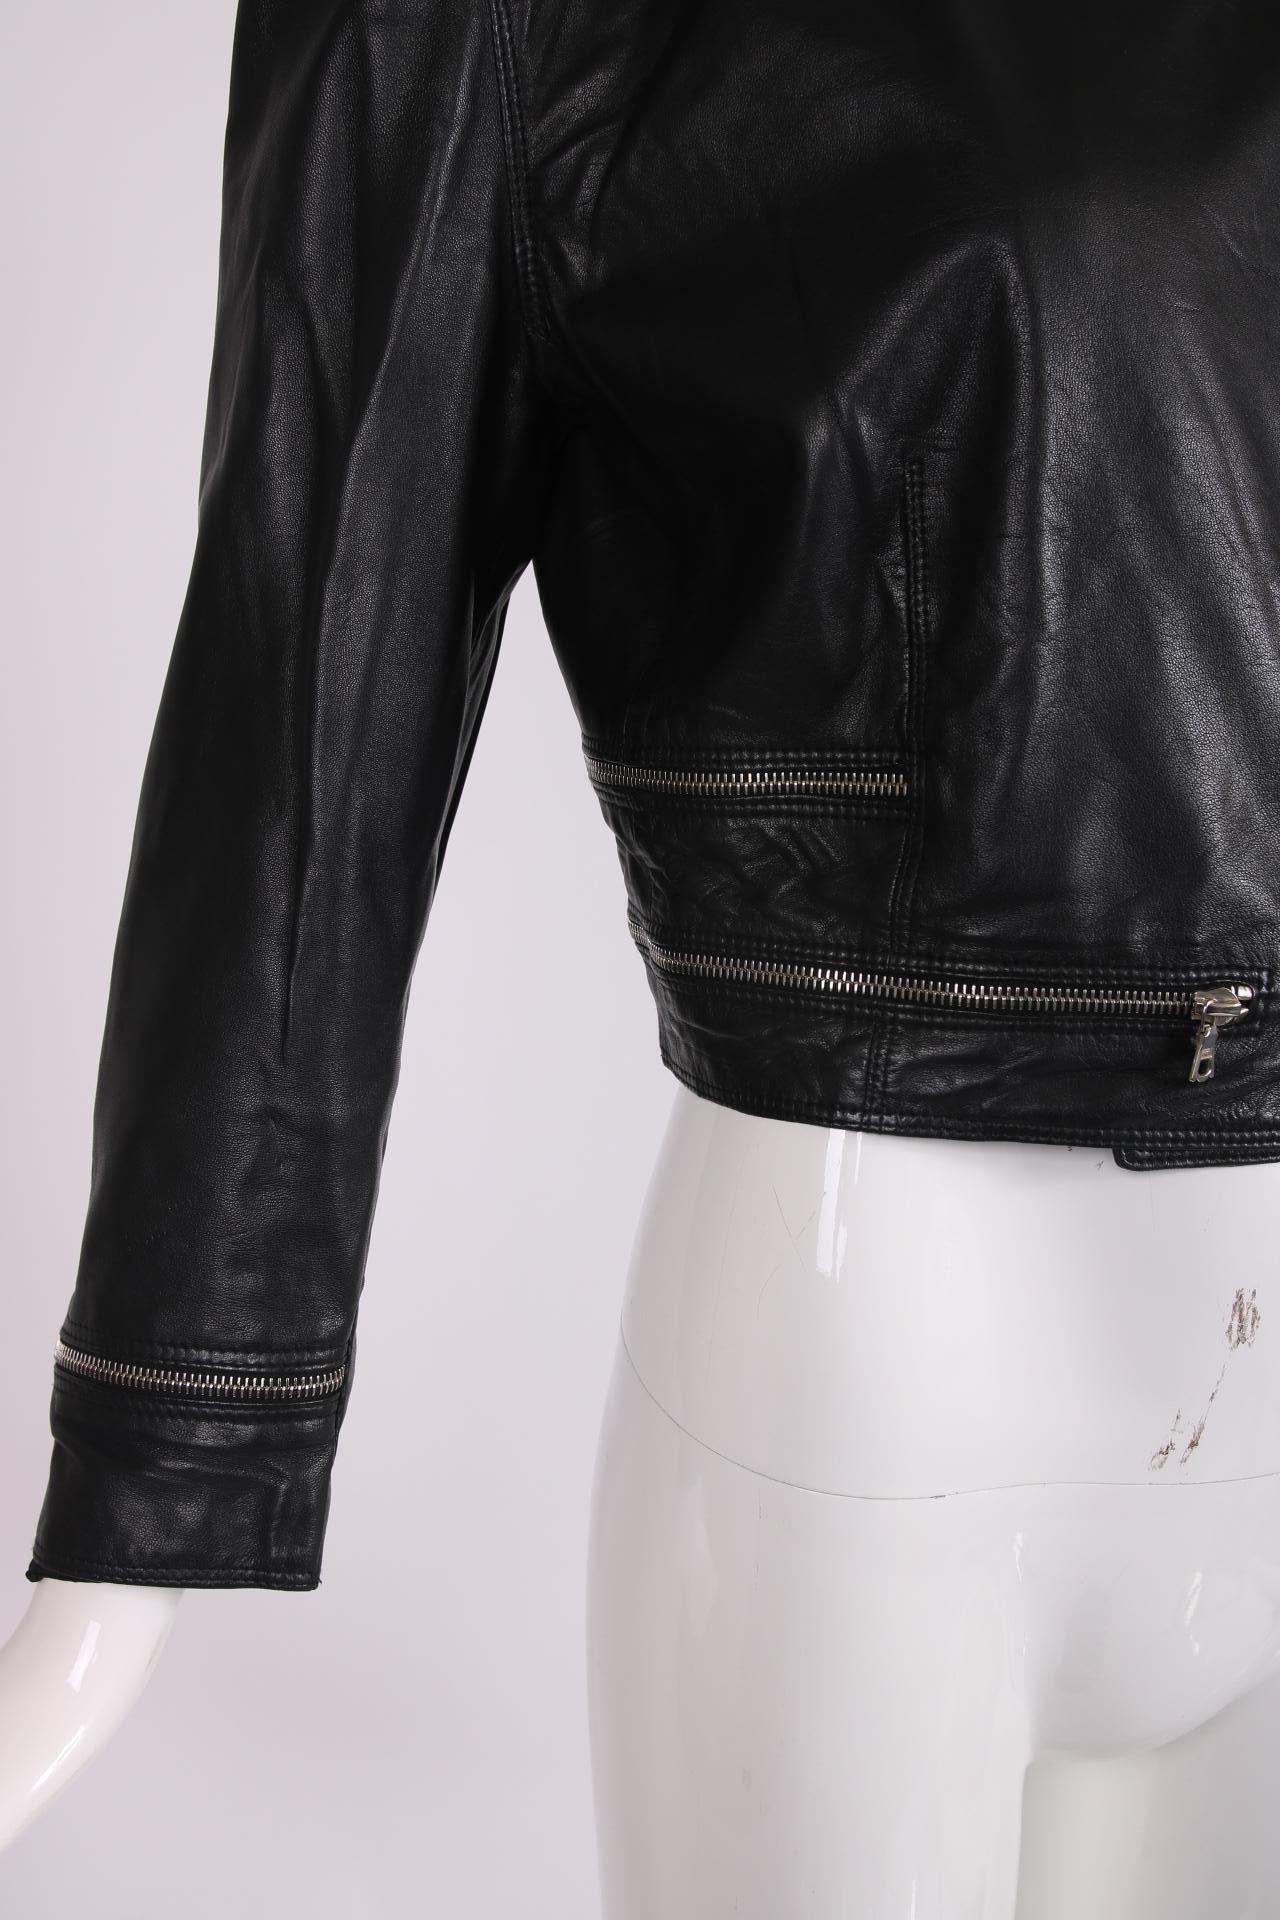 Versace Black Leather Motorcycle Jacket 1